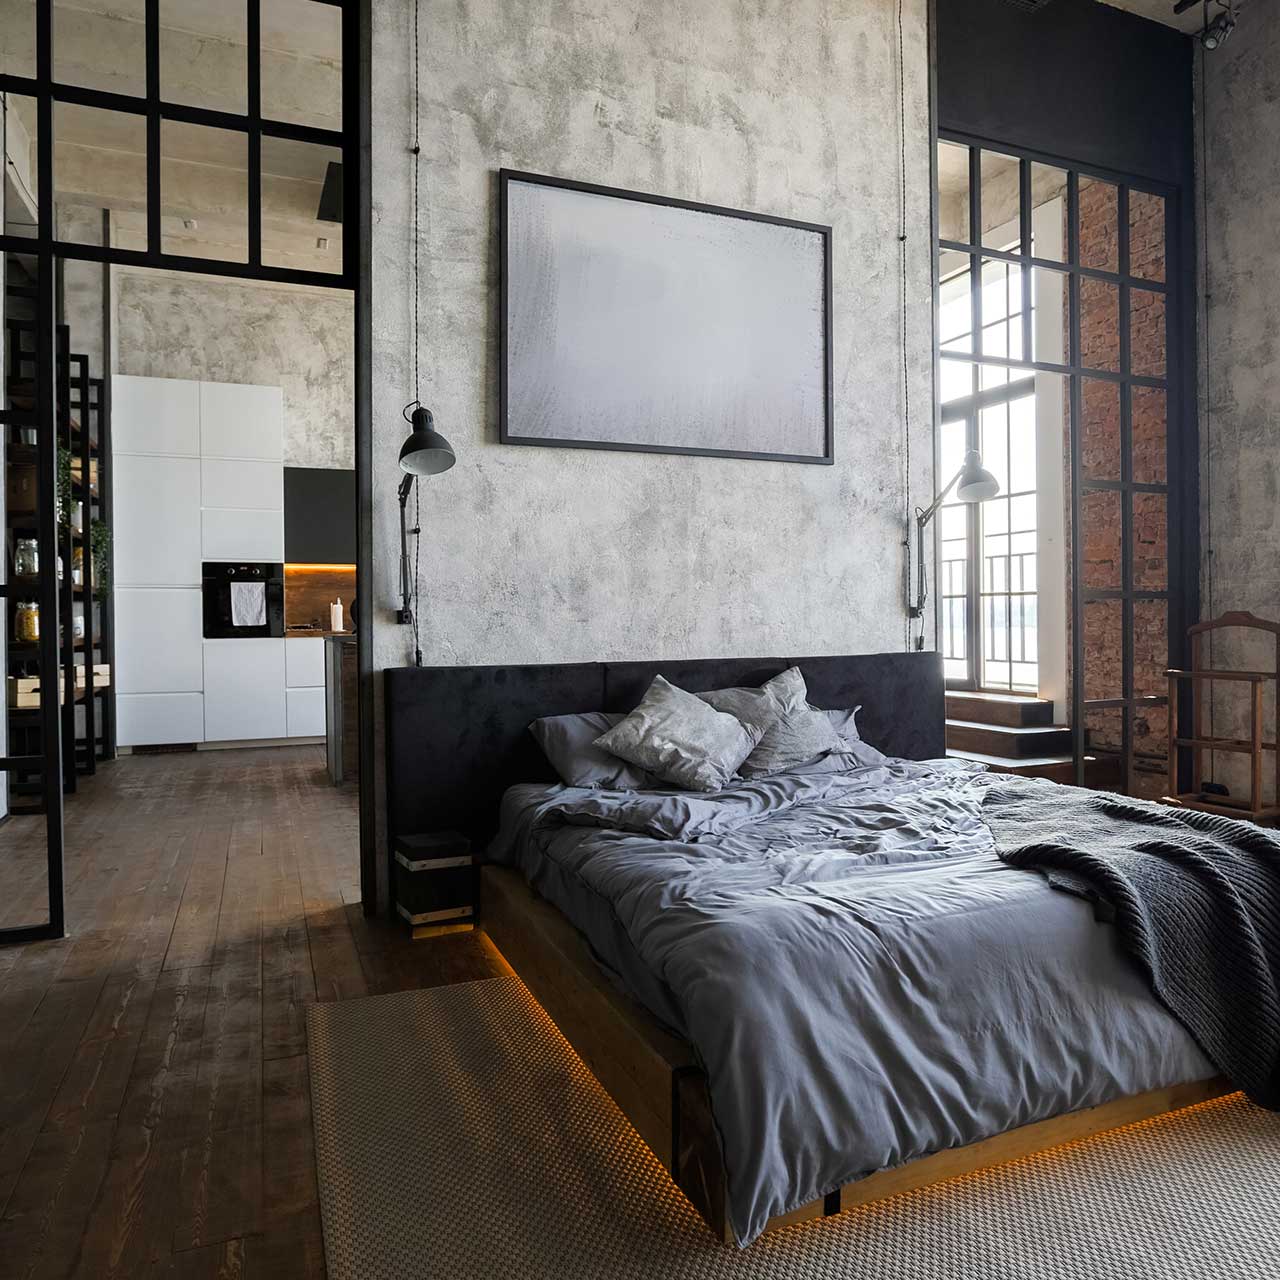 Contemporary Industrial Bedroom Design for Urban Living